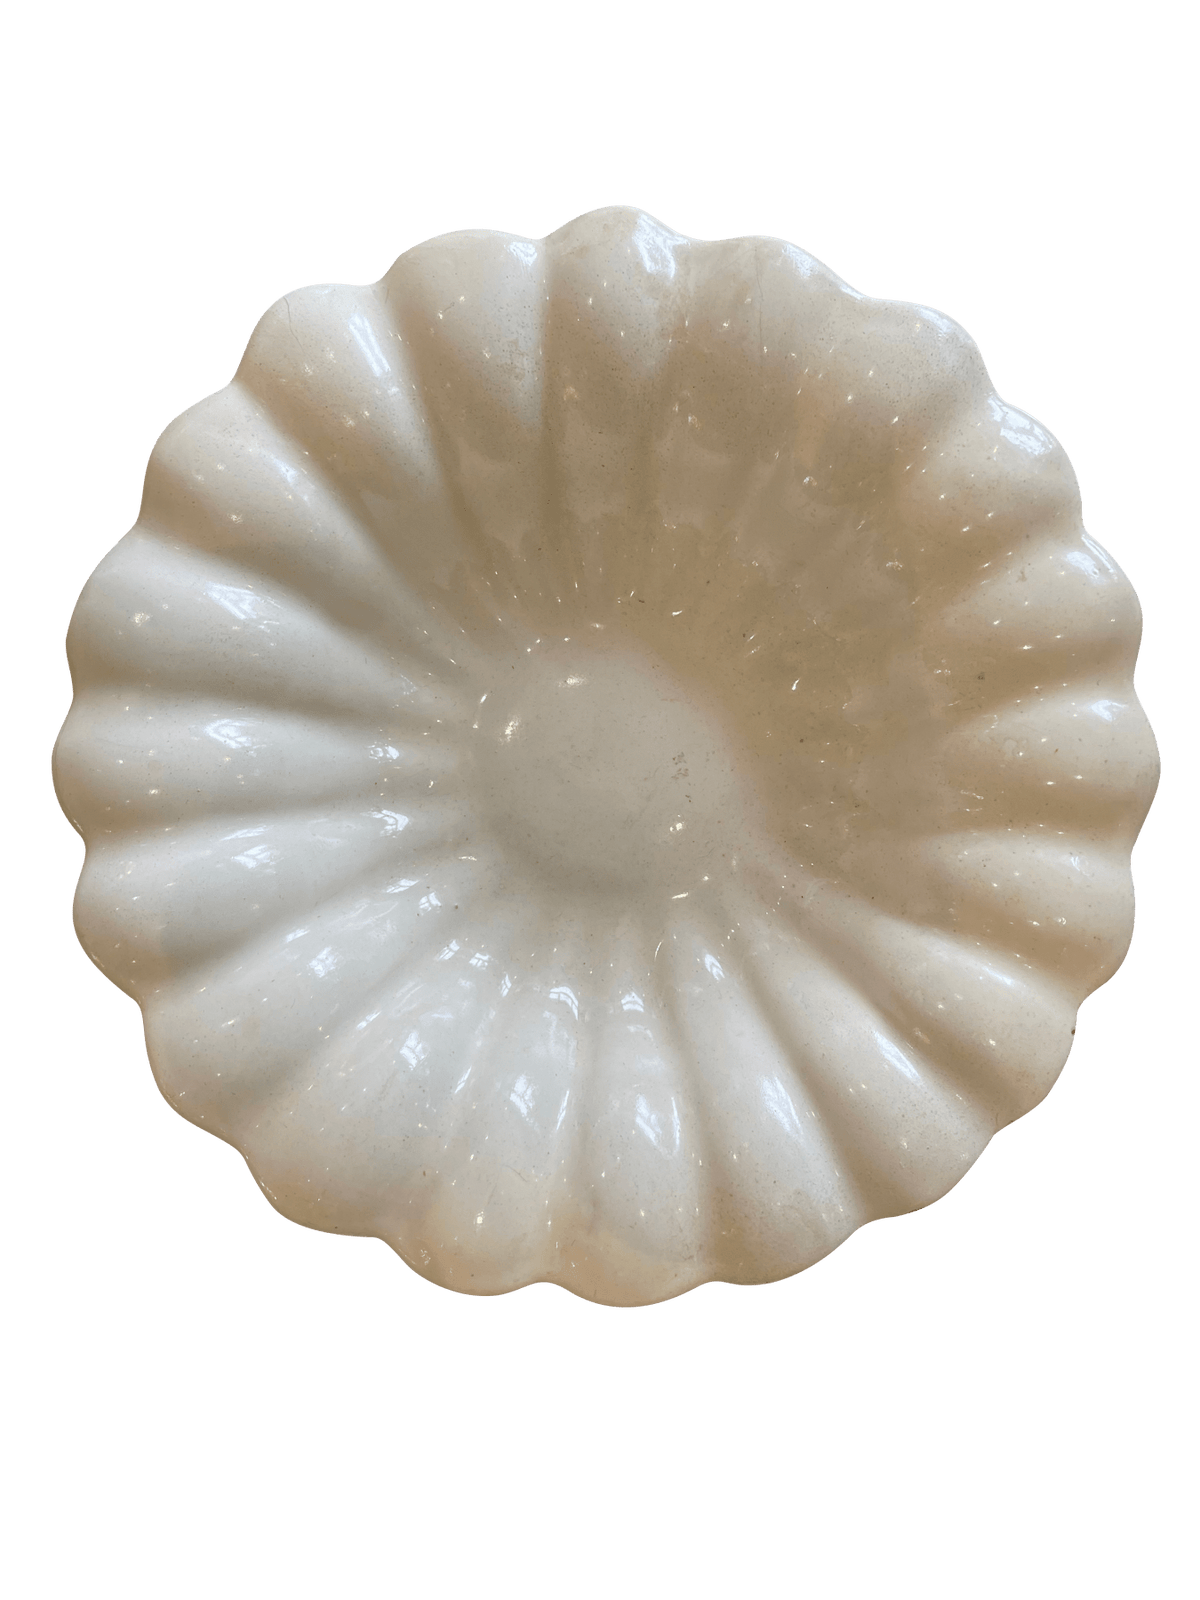 Rare White Gadrooned Delft Plooischotel Bowl - Helen Storey Antiques